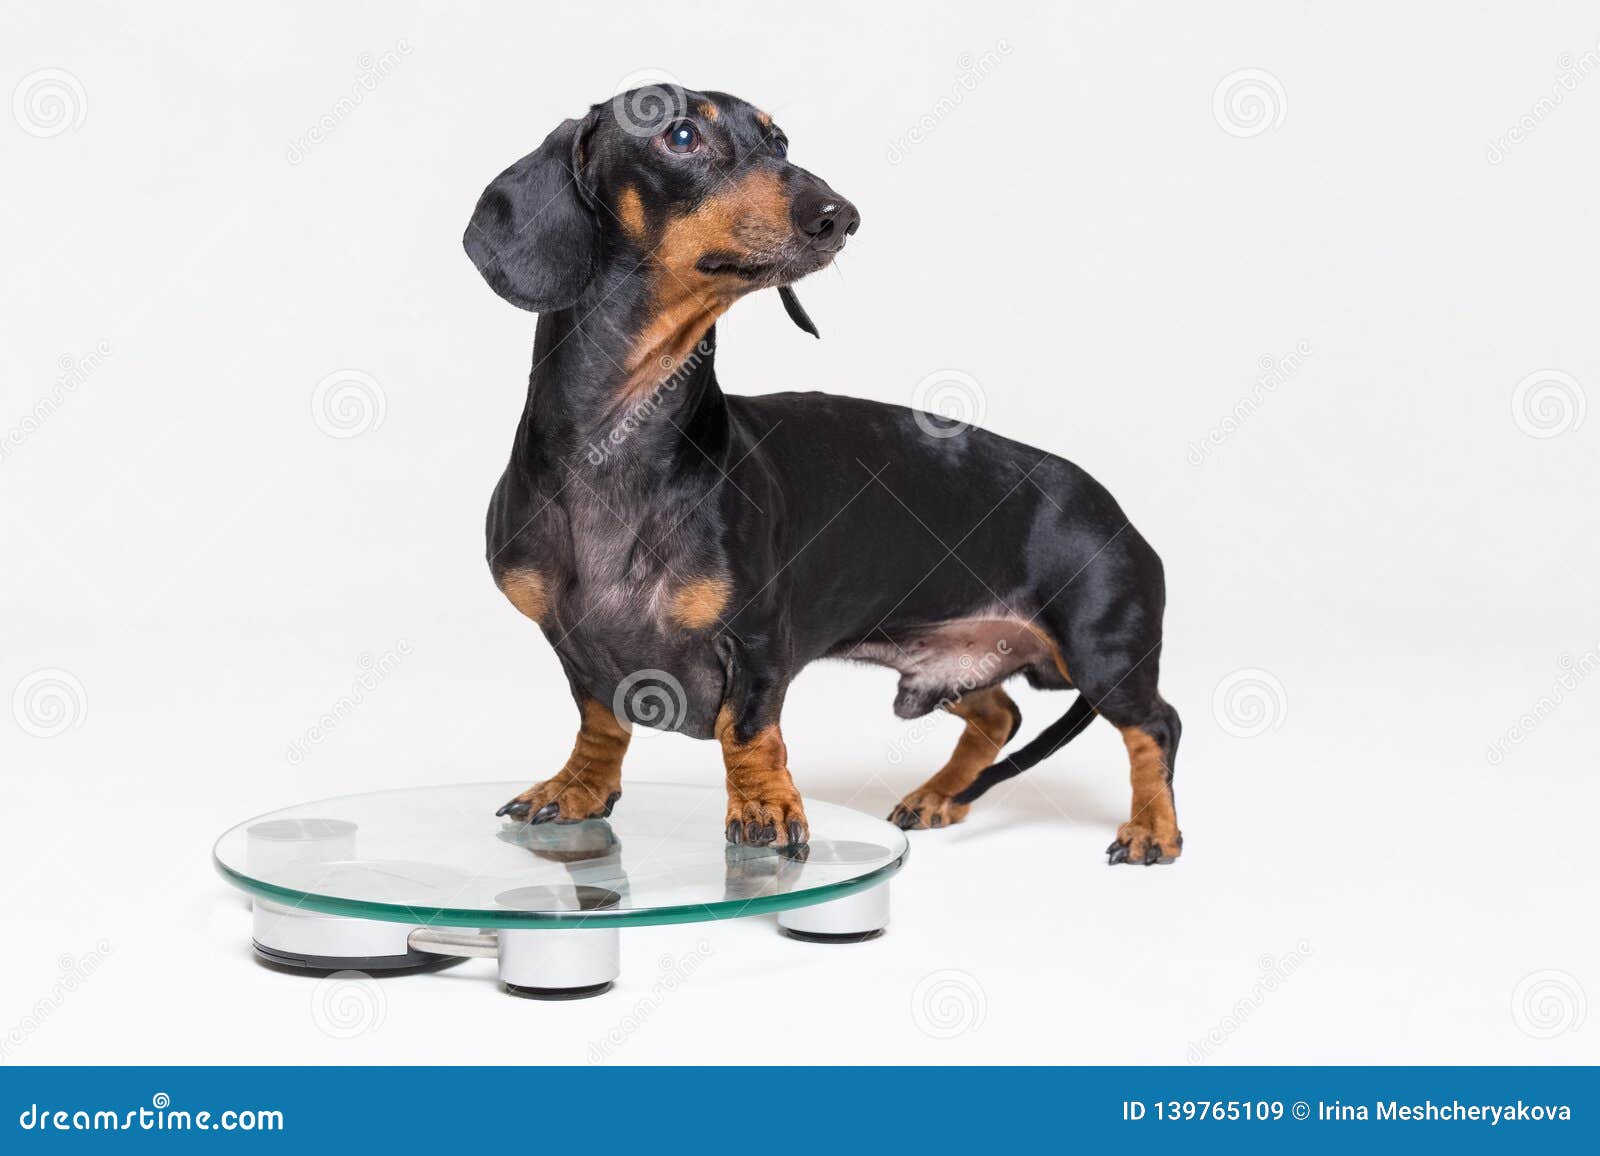 cute dog dachshund, black adn tan, on a glass scales,  on gray background